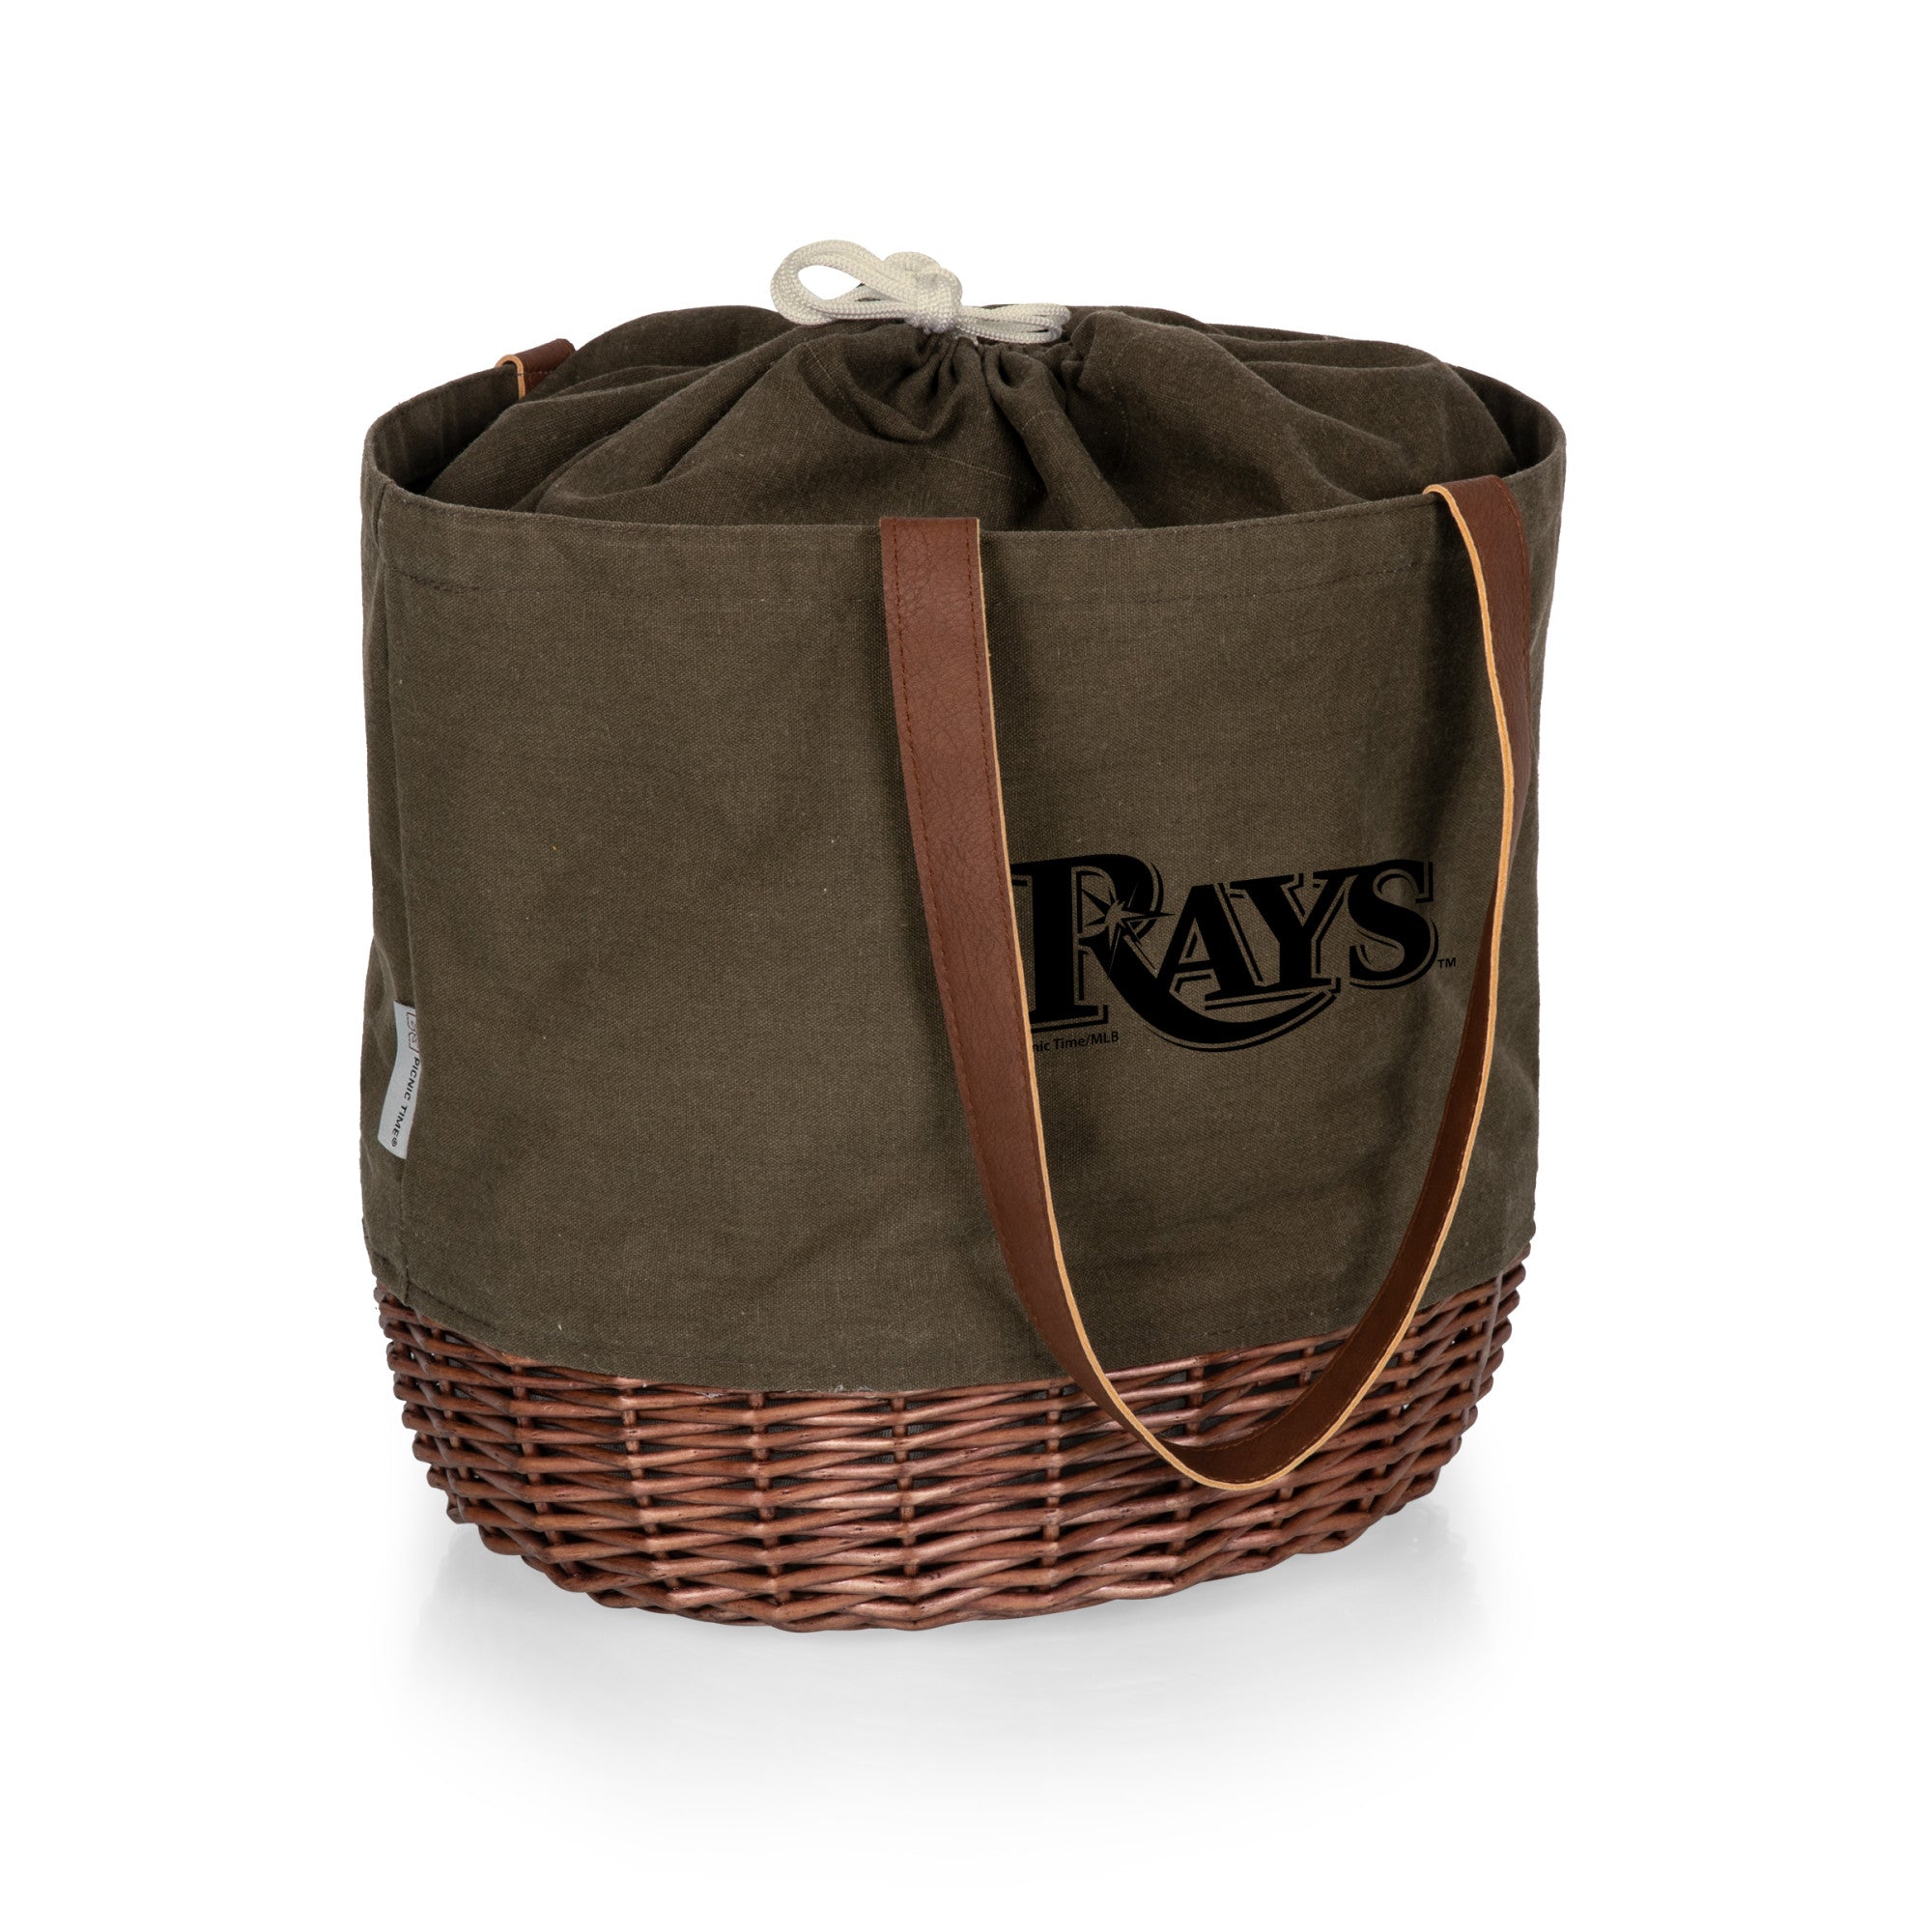 Tampa Bay Rays - Coronado Canvas and Willow Basket Tote